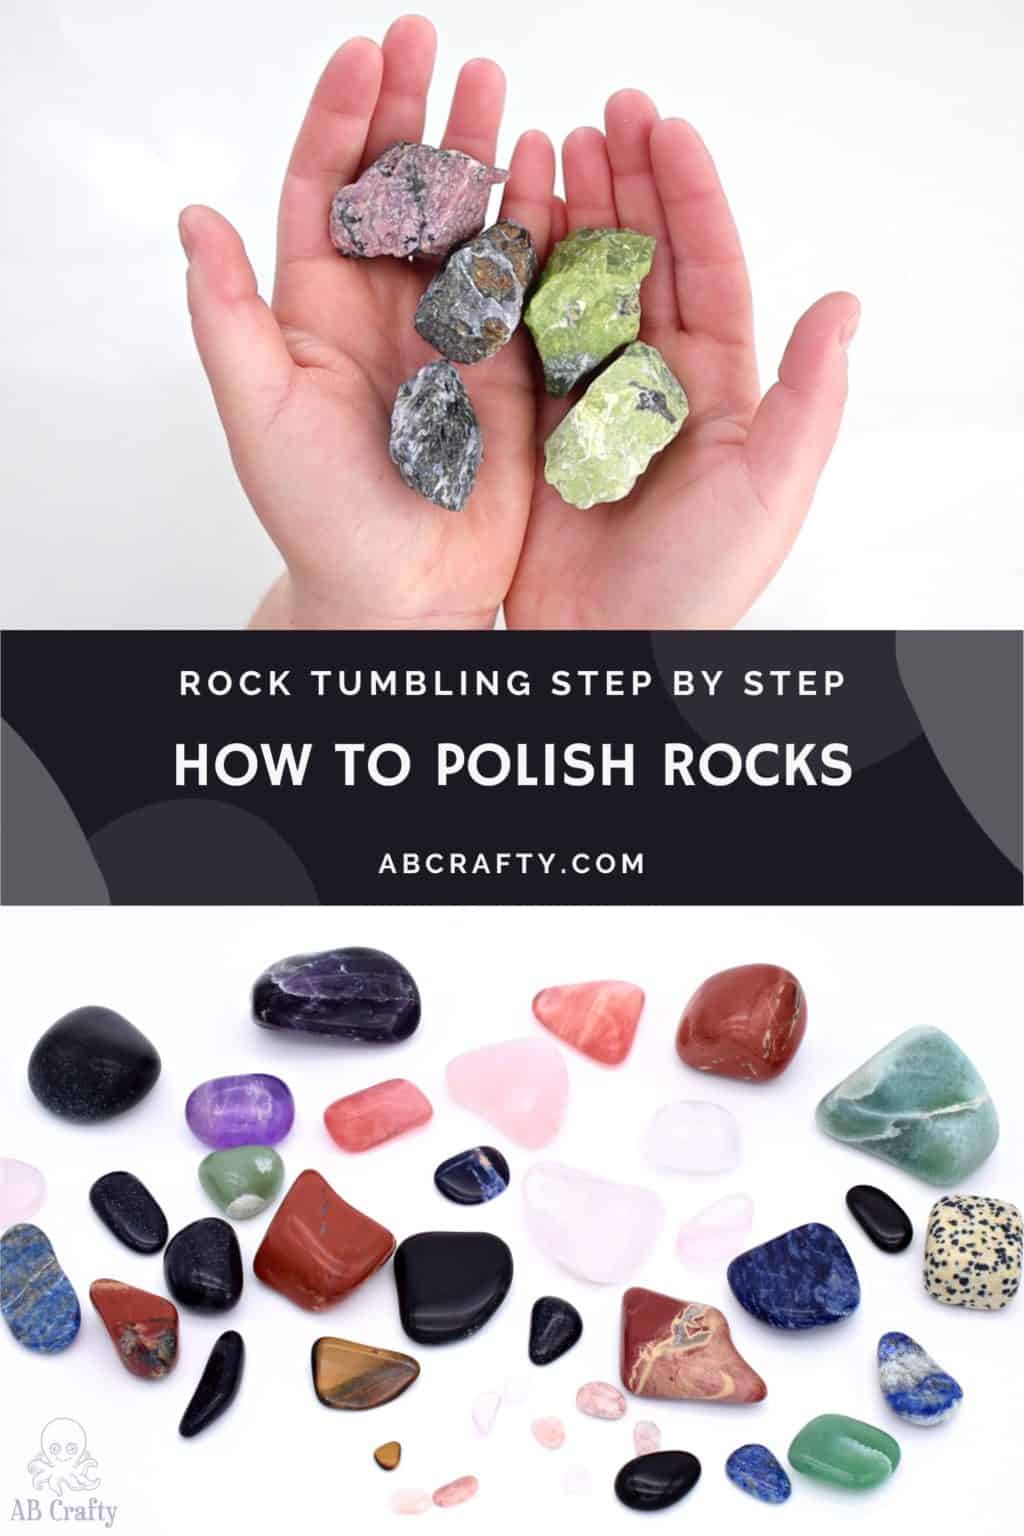 Tips to polish? Unknown white rocks. : r/RockTumbling